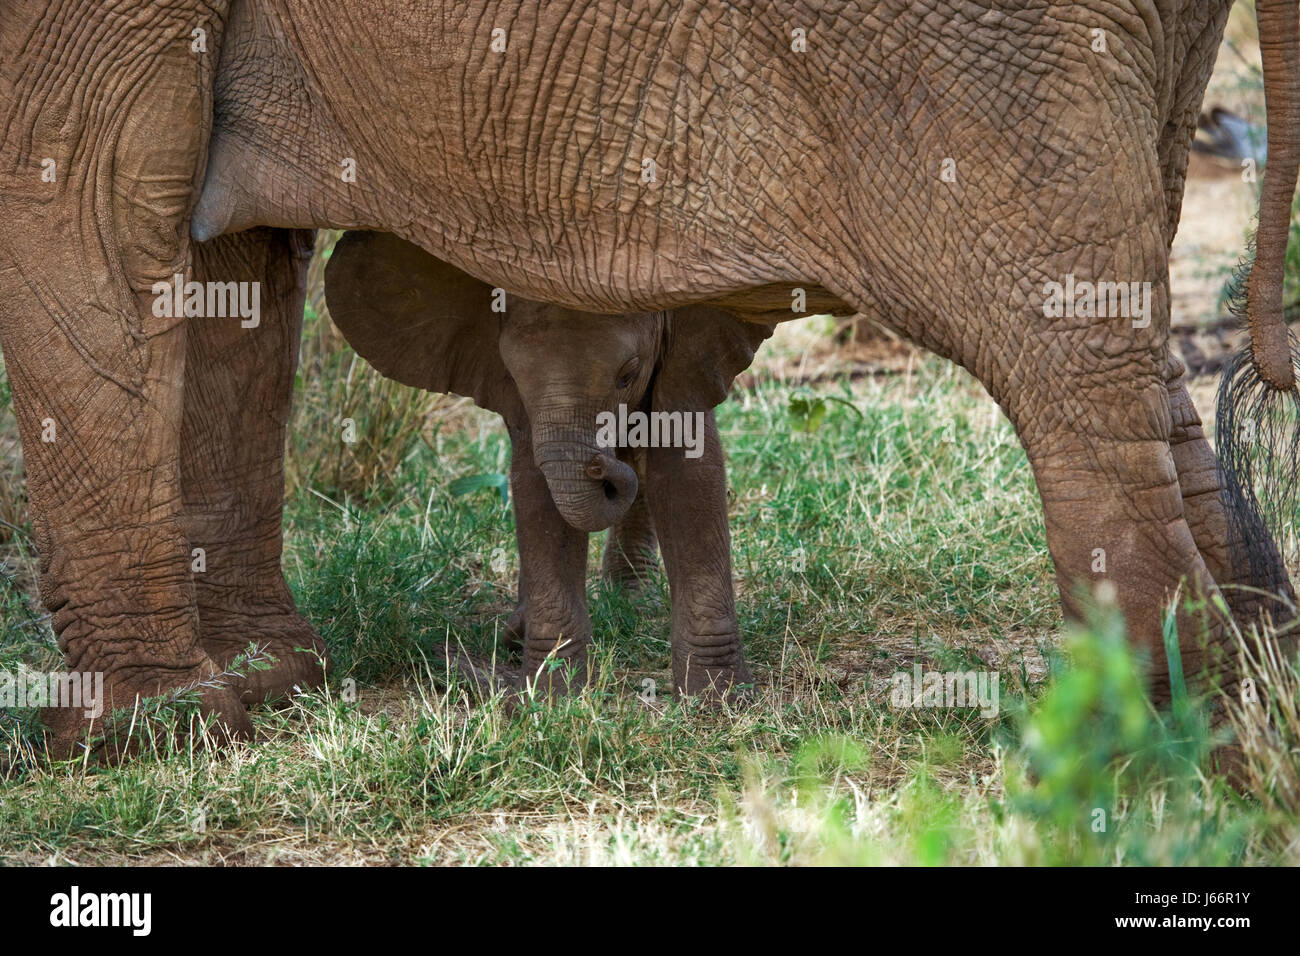 Baby elephant it goes close to his mother. Africa. Kenya. Tanzania. Serengeti. Maasai Mara. An excellent illustration. Stock Photo